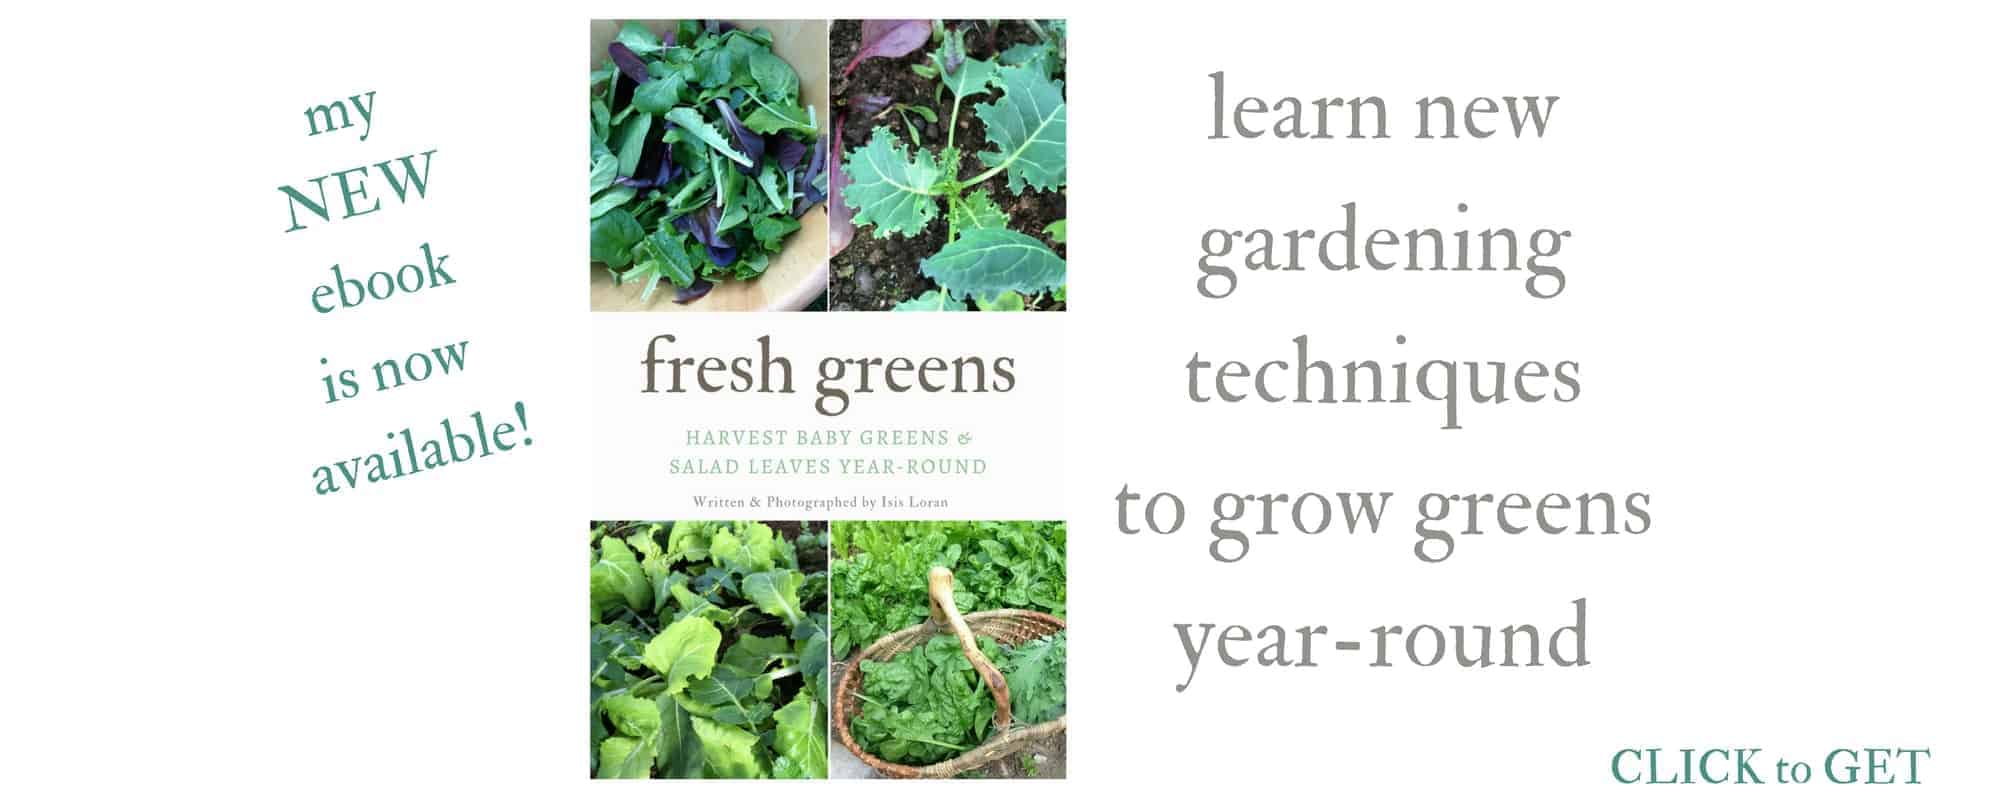 Fresh Greens eBook (Harvest baby greens & salad leaves year-round)